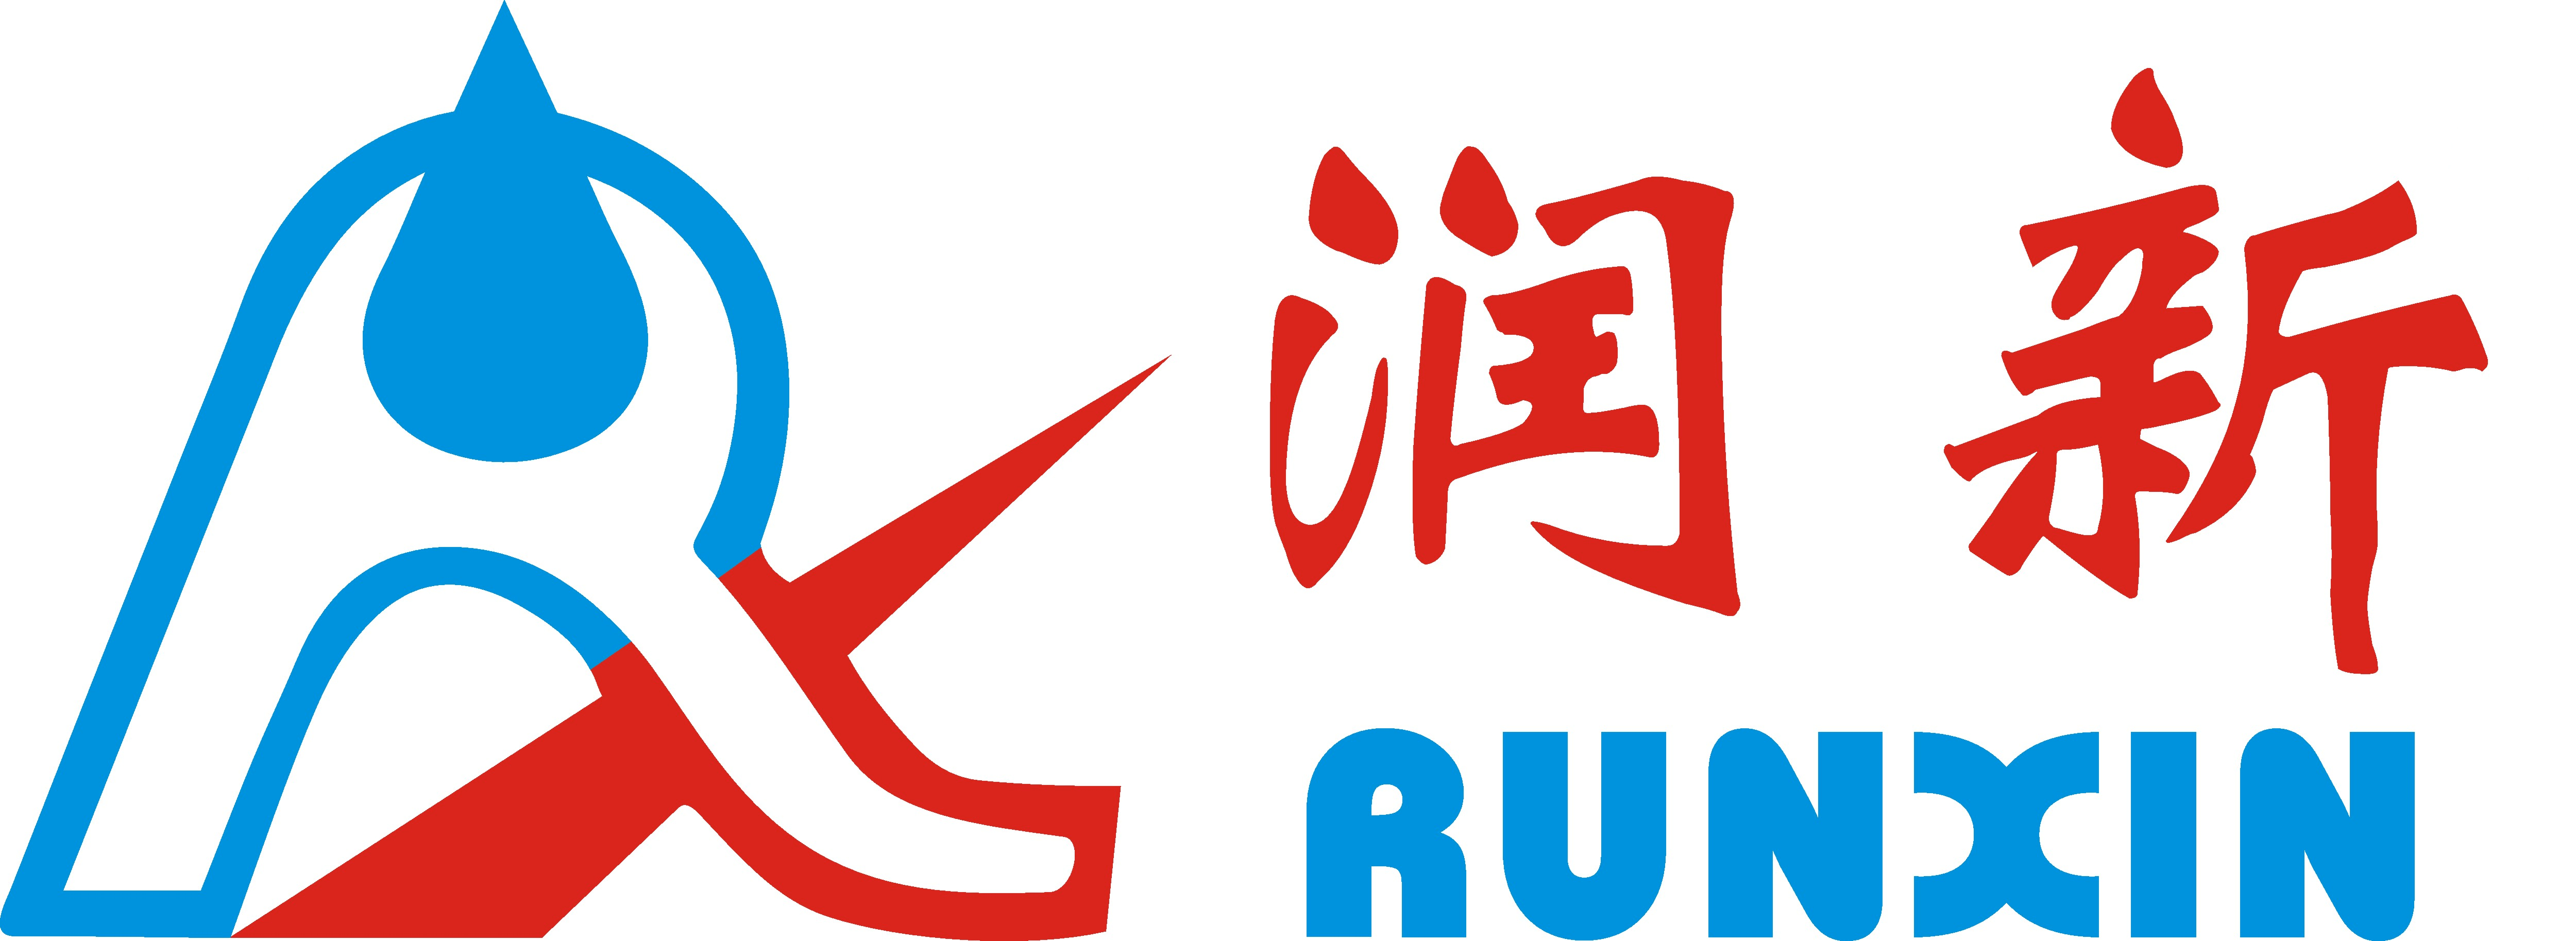 Runxin logo